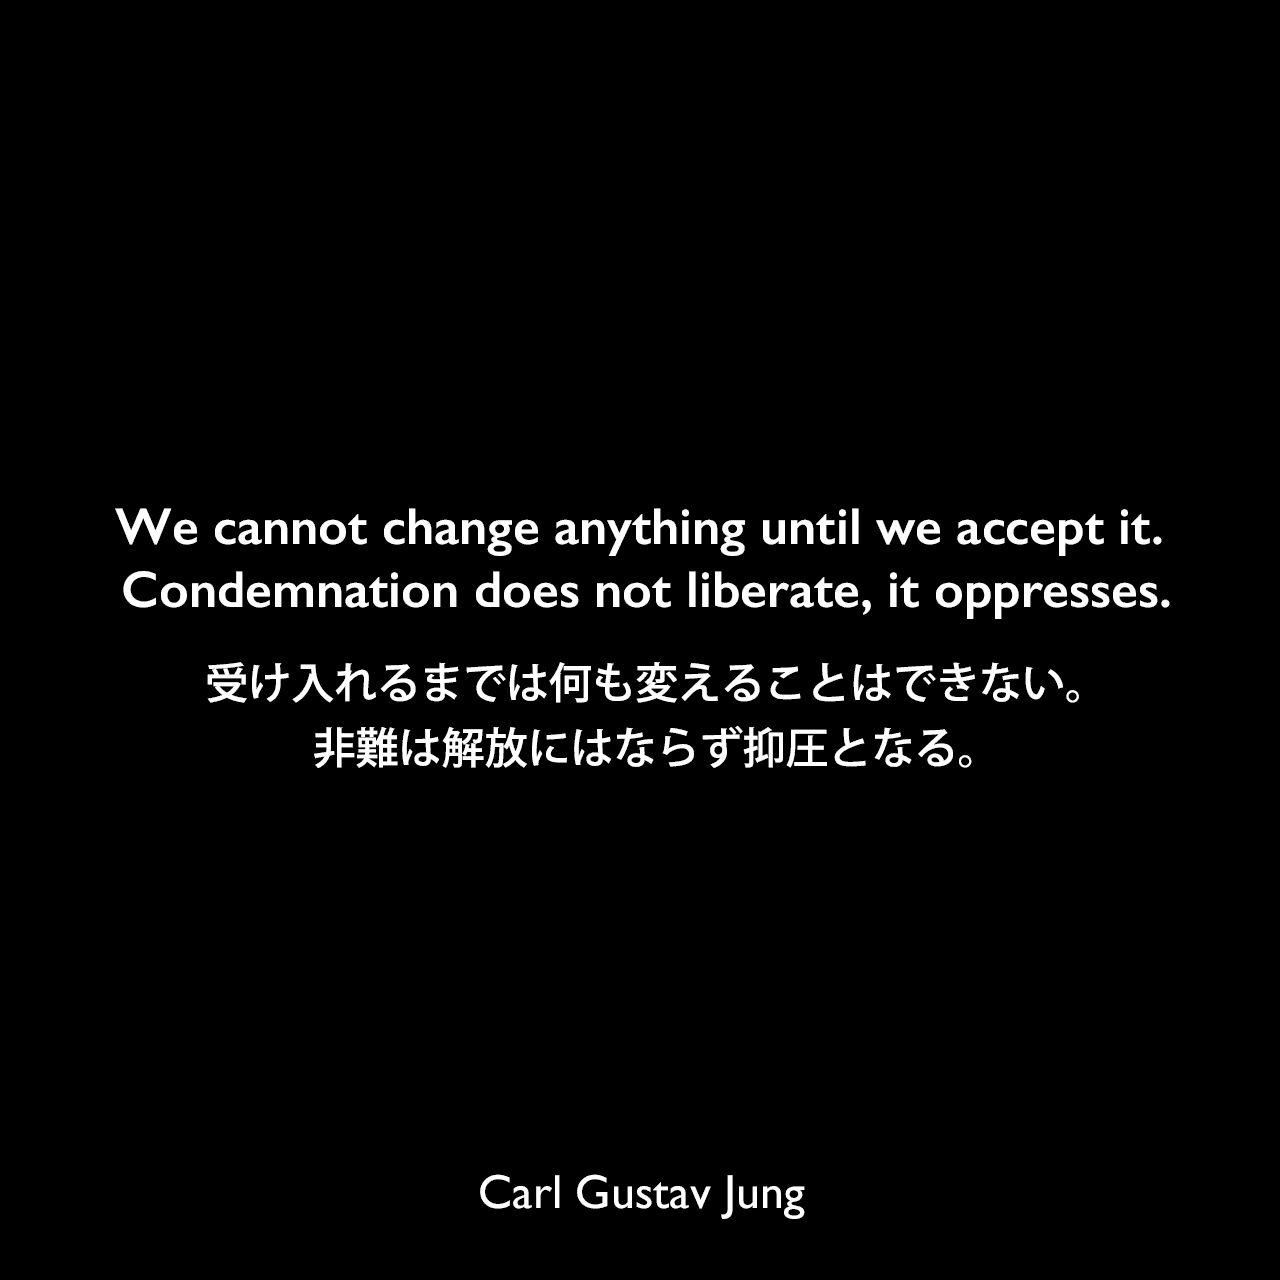 We cannot change anything until we accept it. Condemnation does not liberate, it oppresses.受け入れるまでは何も変えることはできない。非難は解放にはならず抑圧となる。Carl Gustav Jung